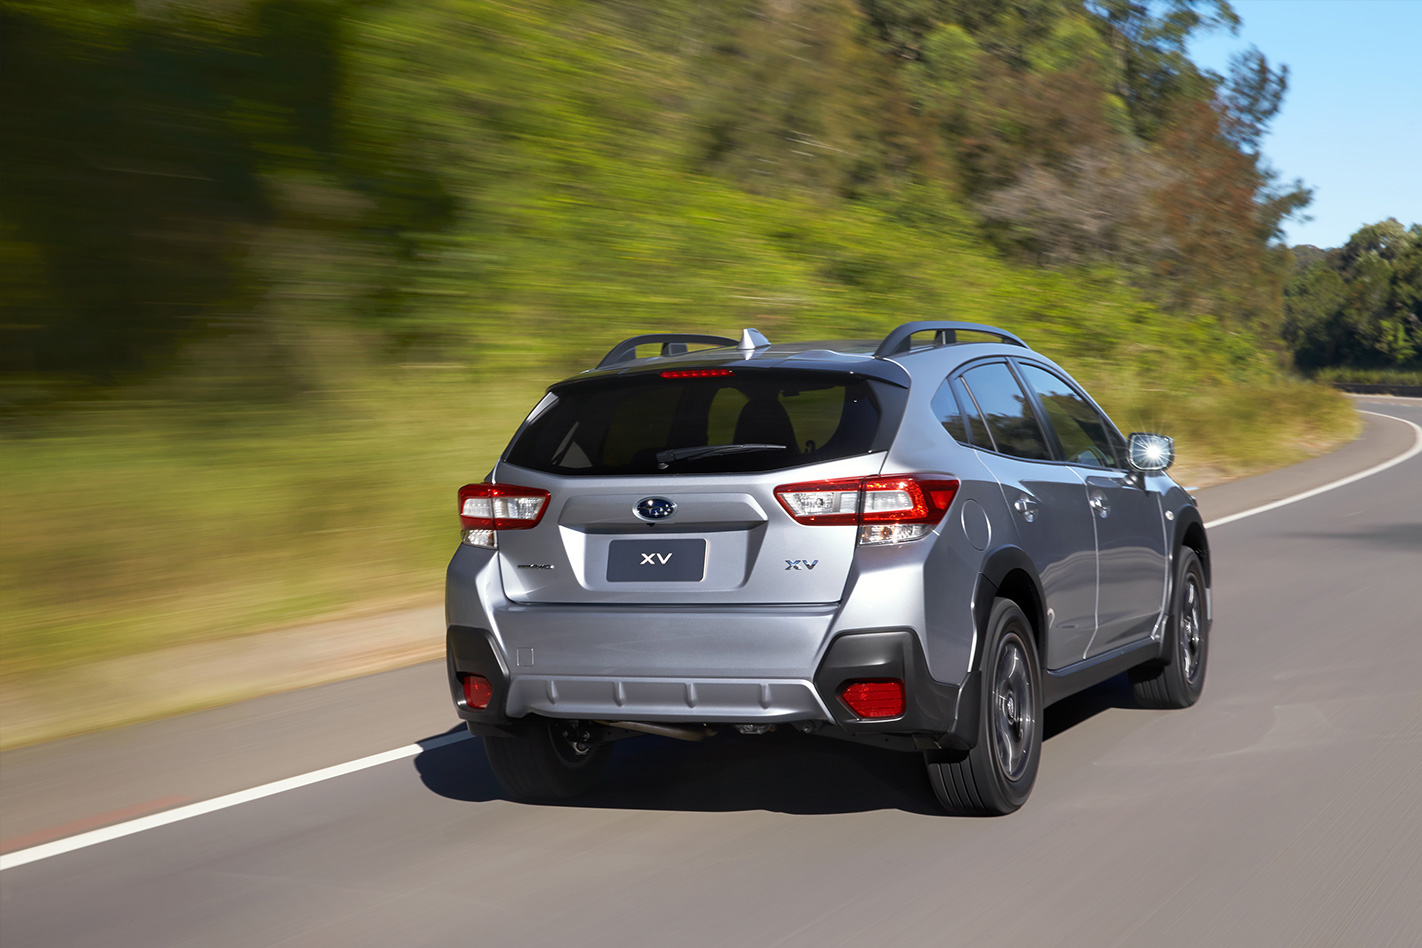 2017 Subaru XV 2.0i quick review